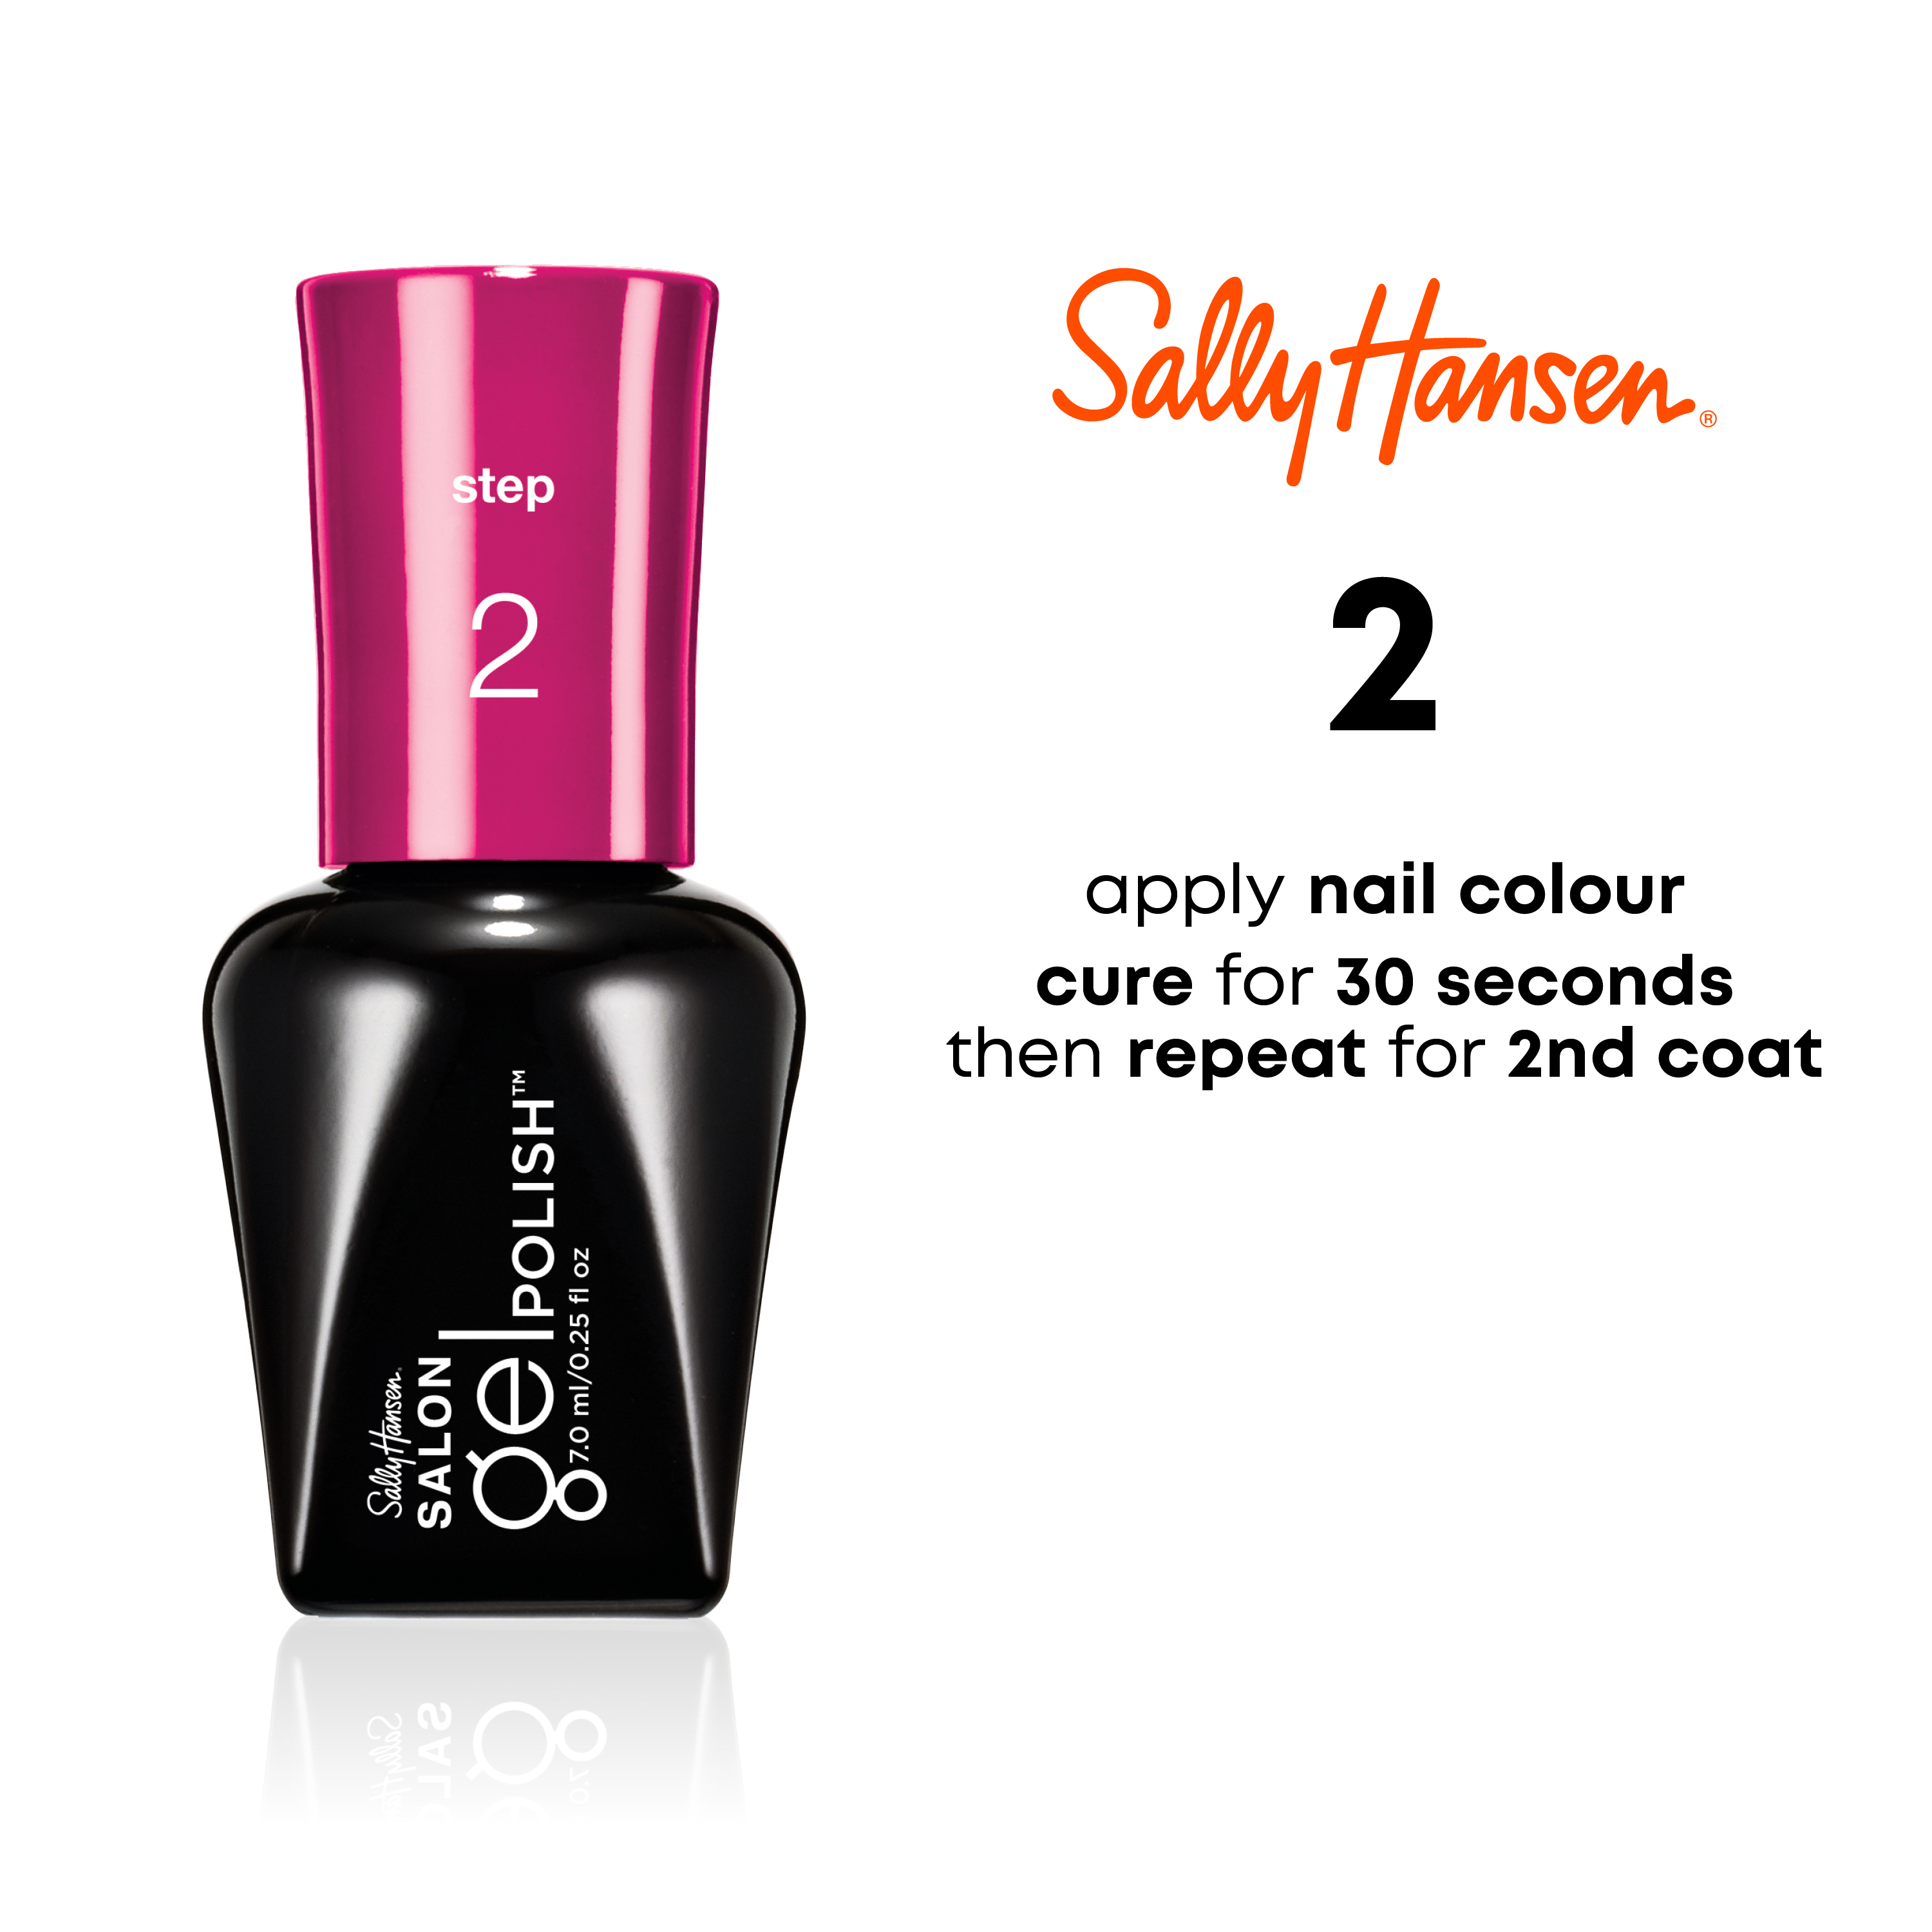 Sally Hansen Salon Gel Polish Nail Color, 0.25 oz - image 5 of 7